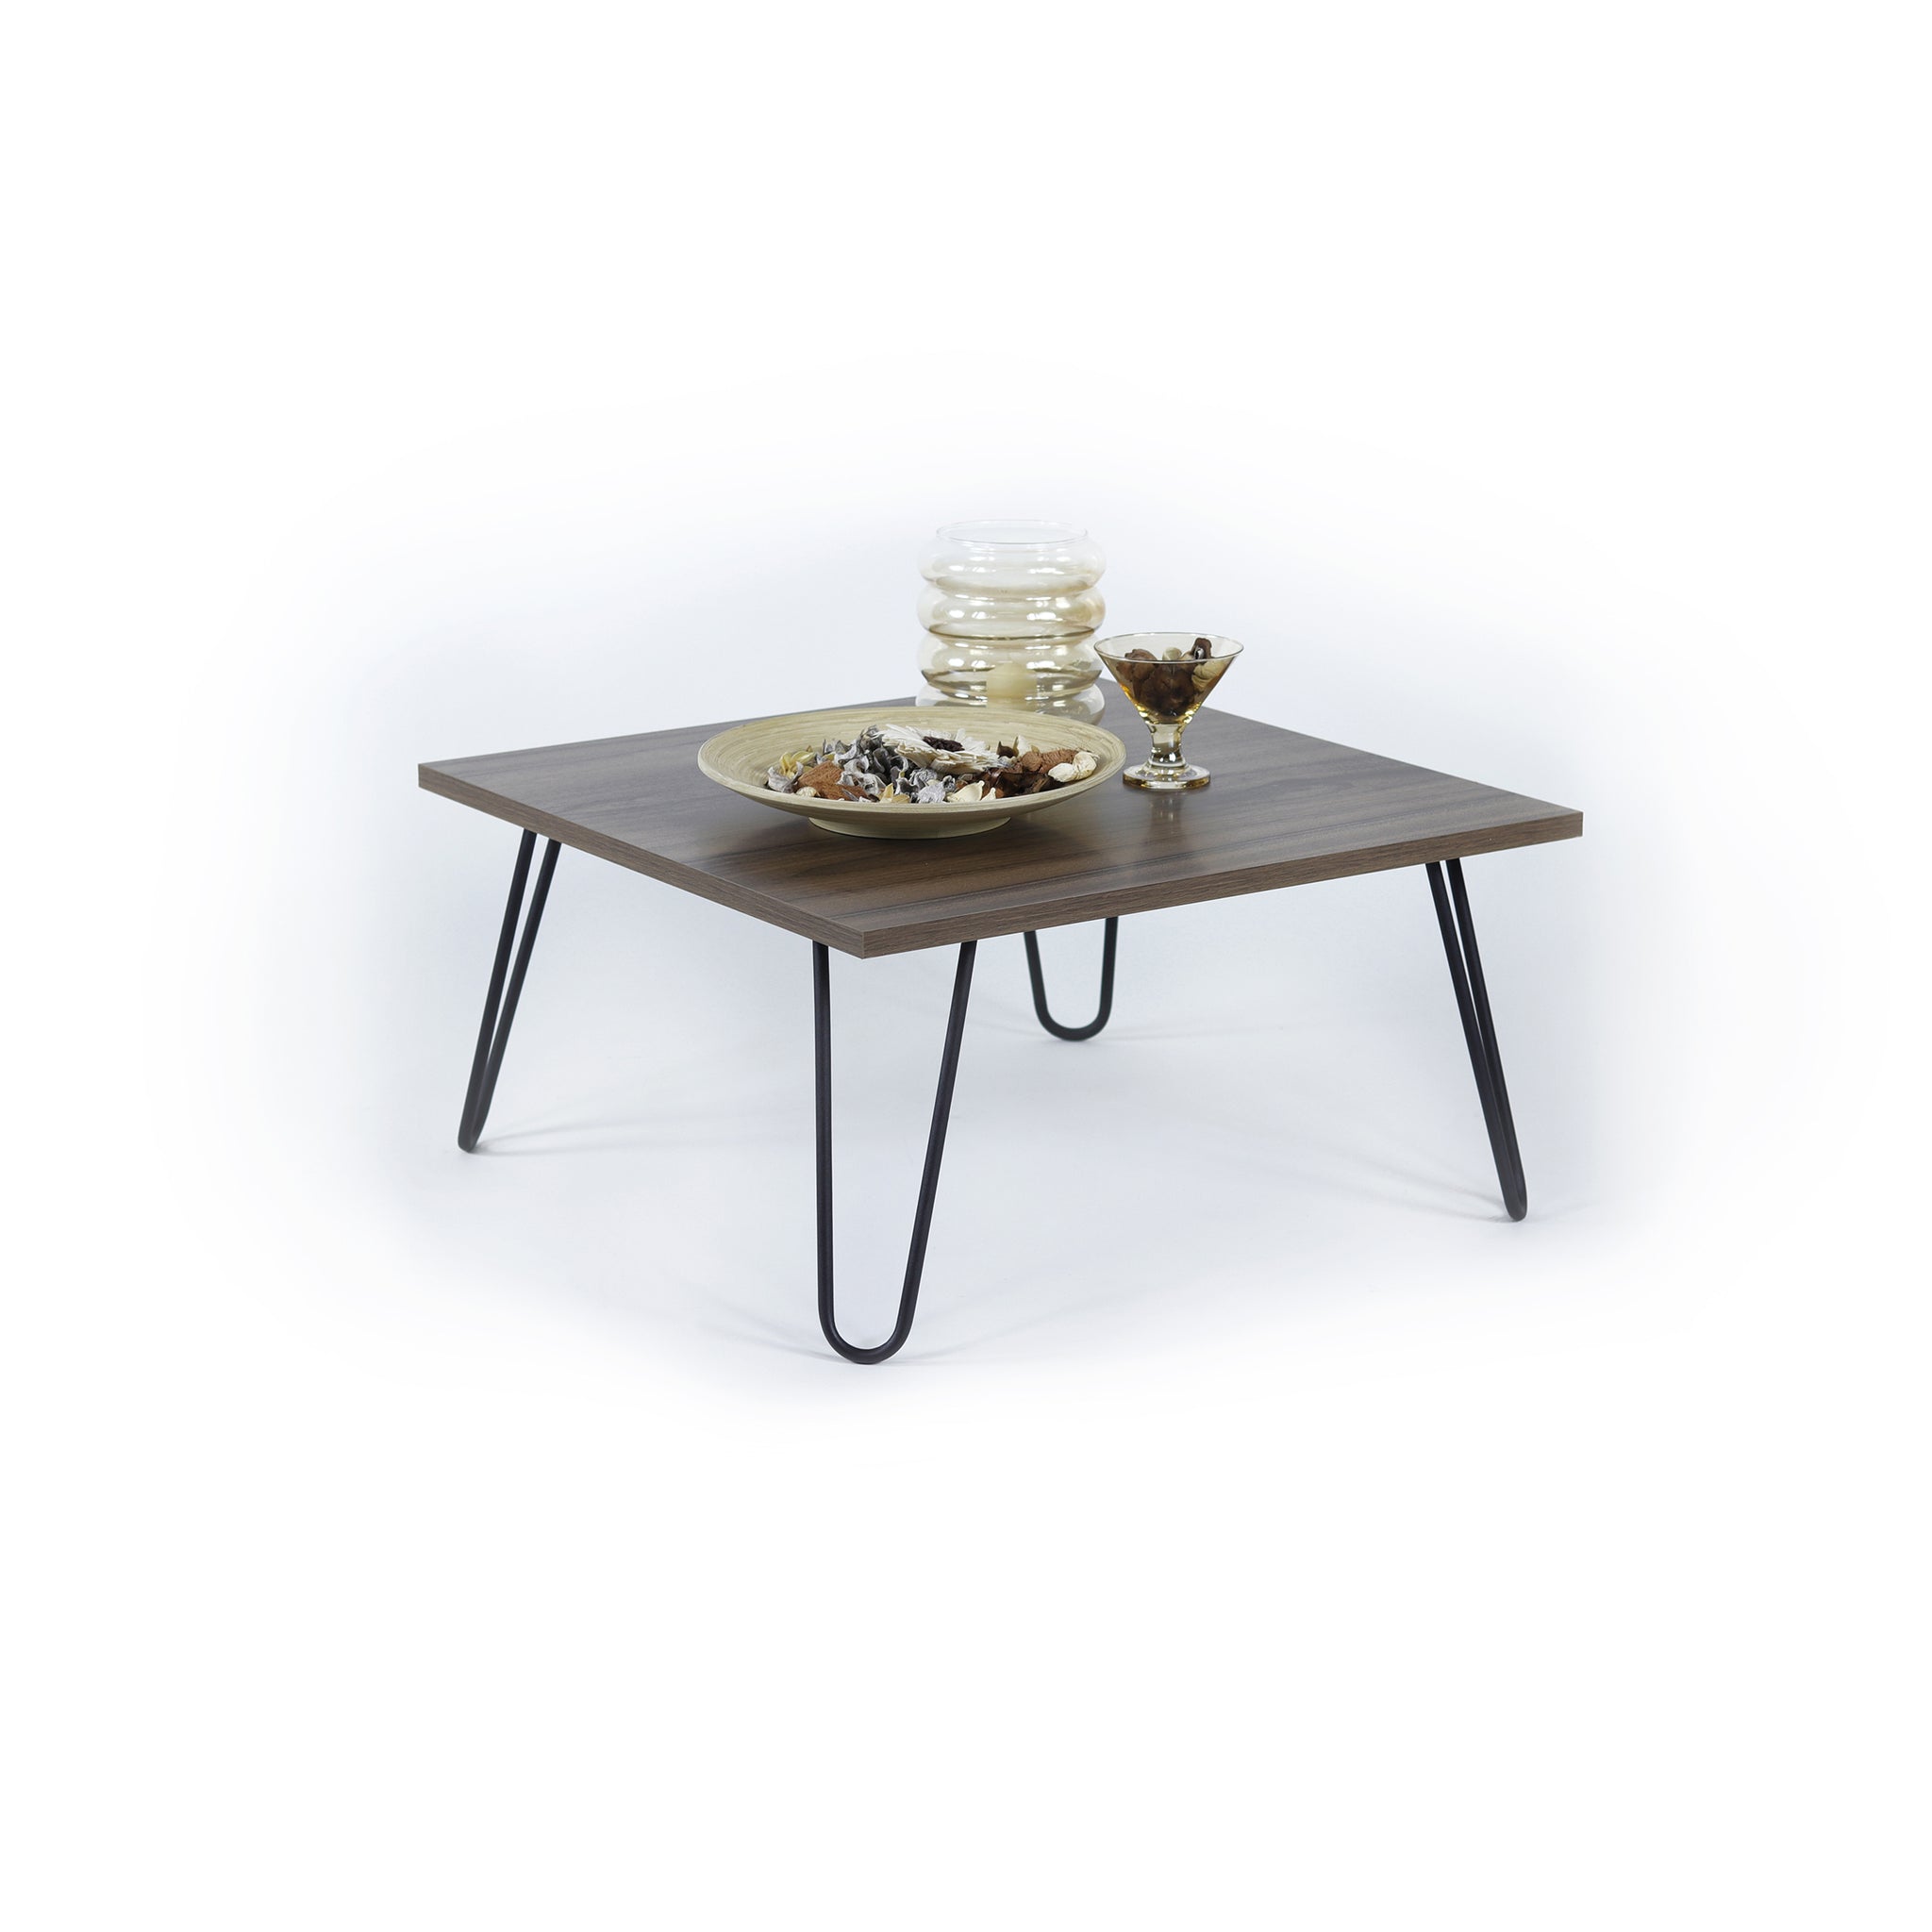 Lona 4 Metal Legs Coffee Table For Living Room walnut+black-wood